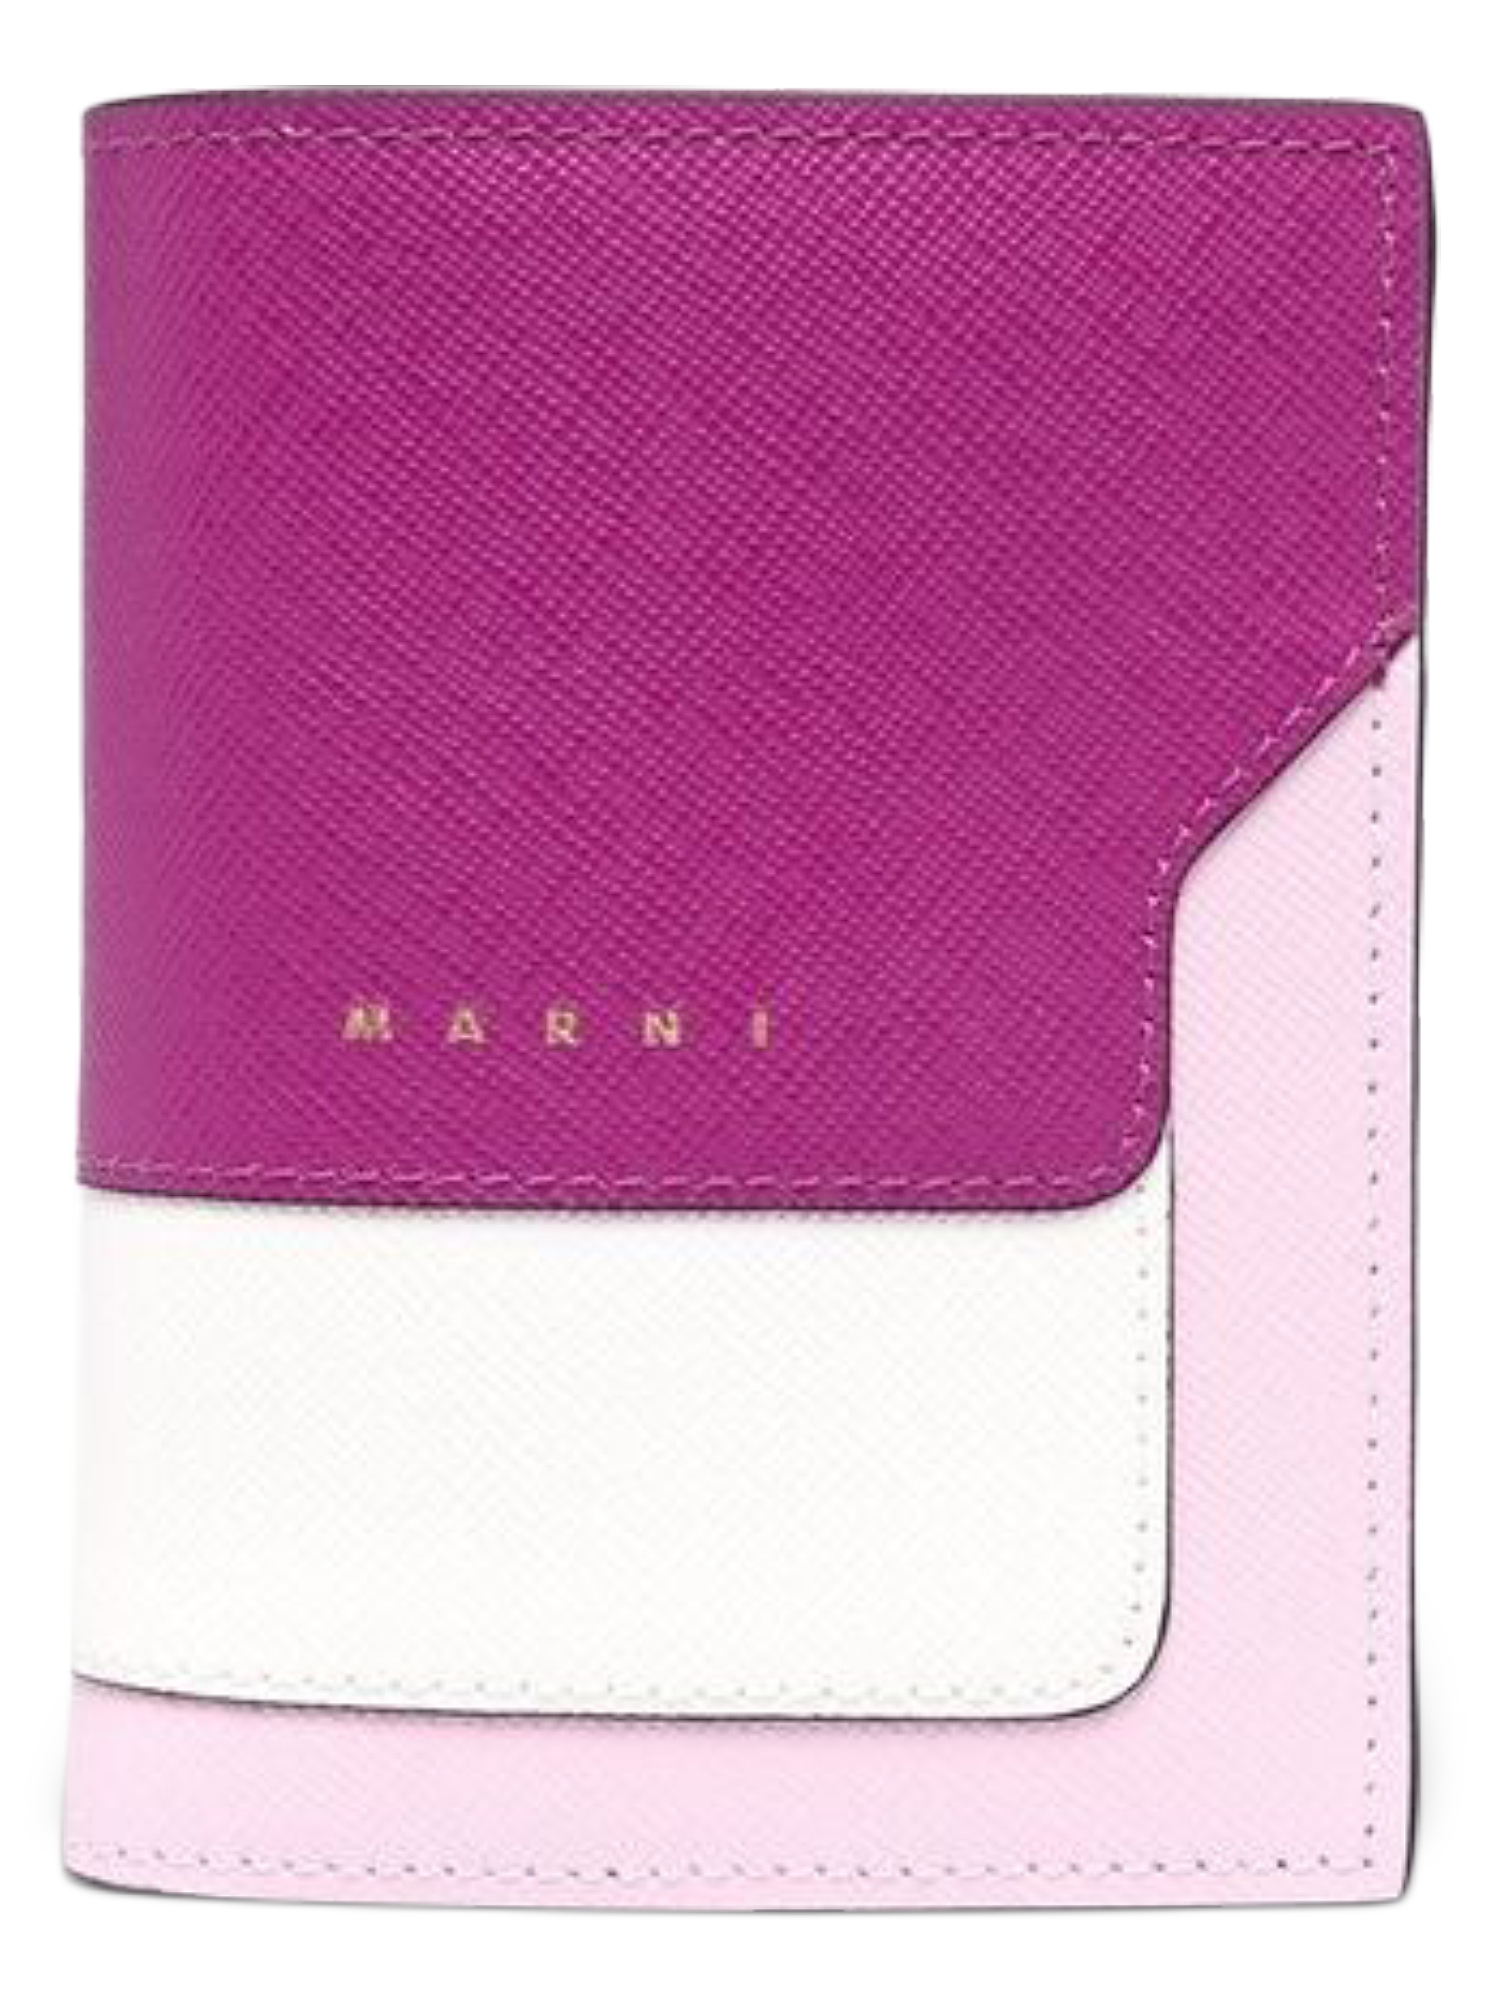 Portefeuilles Pour Femme - Marni - En Leather Pink - Taille:  -